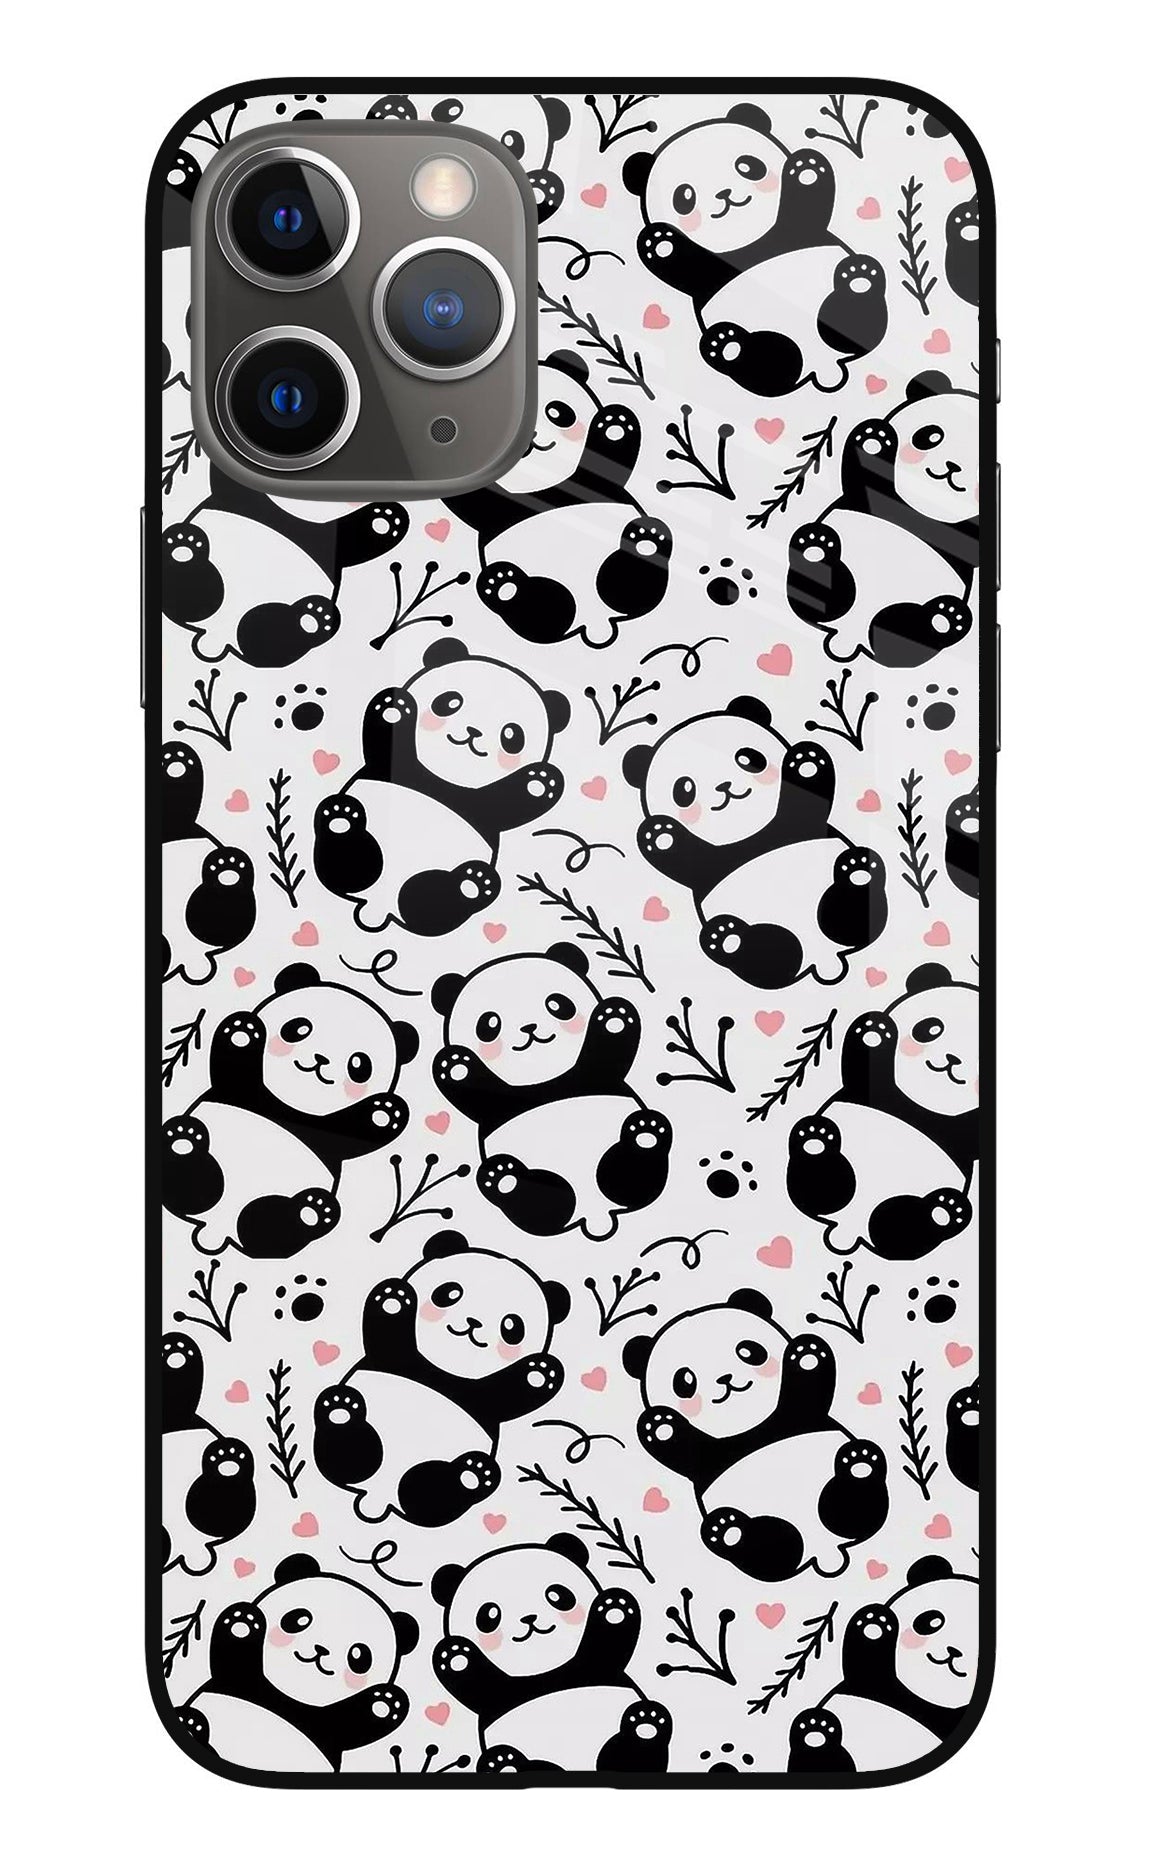 Cute Panda iPhone 11 Pro Back Cover